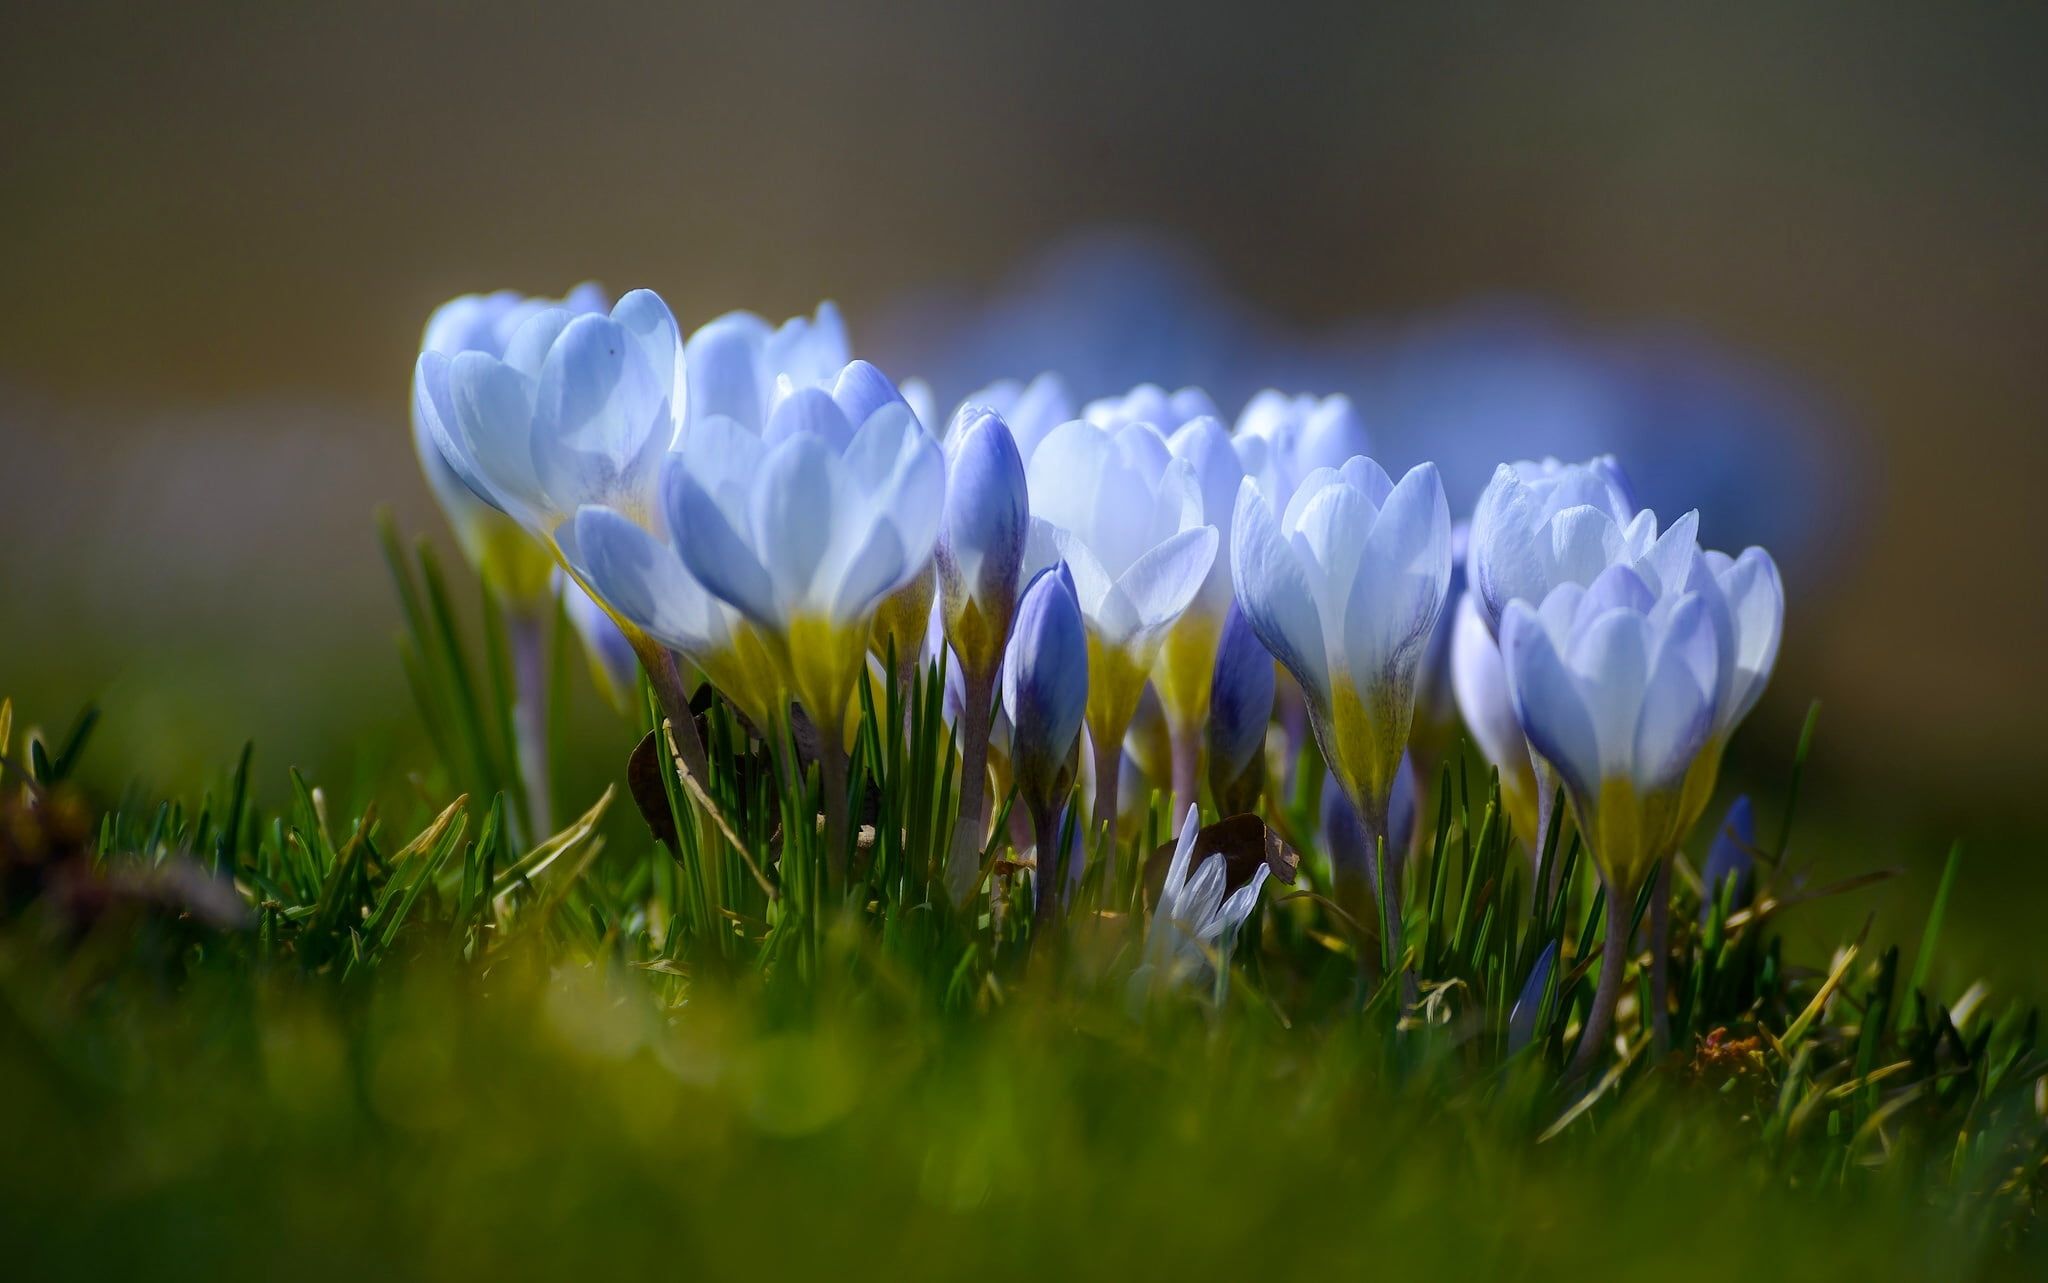 Blue crocus flowers HD wallpaper free download